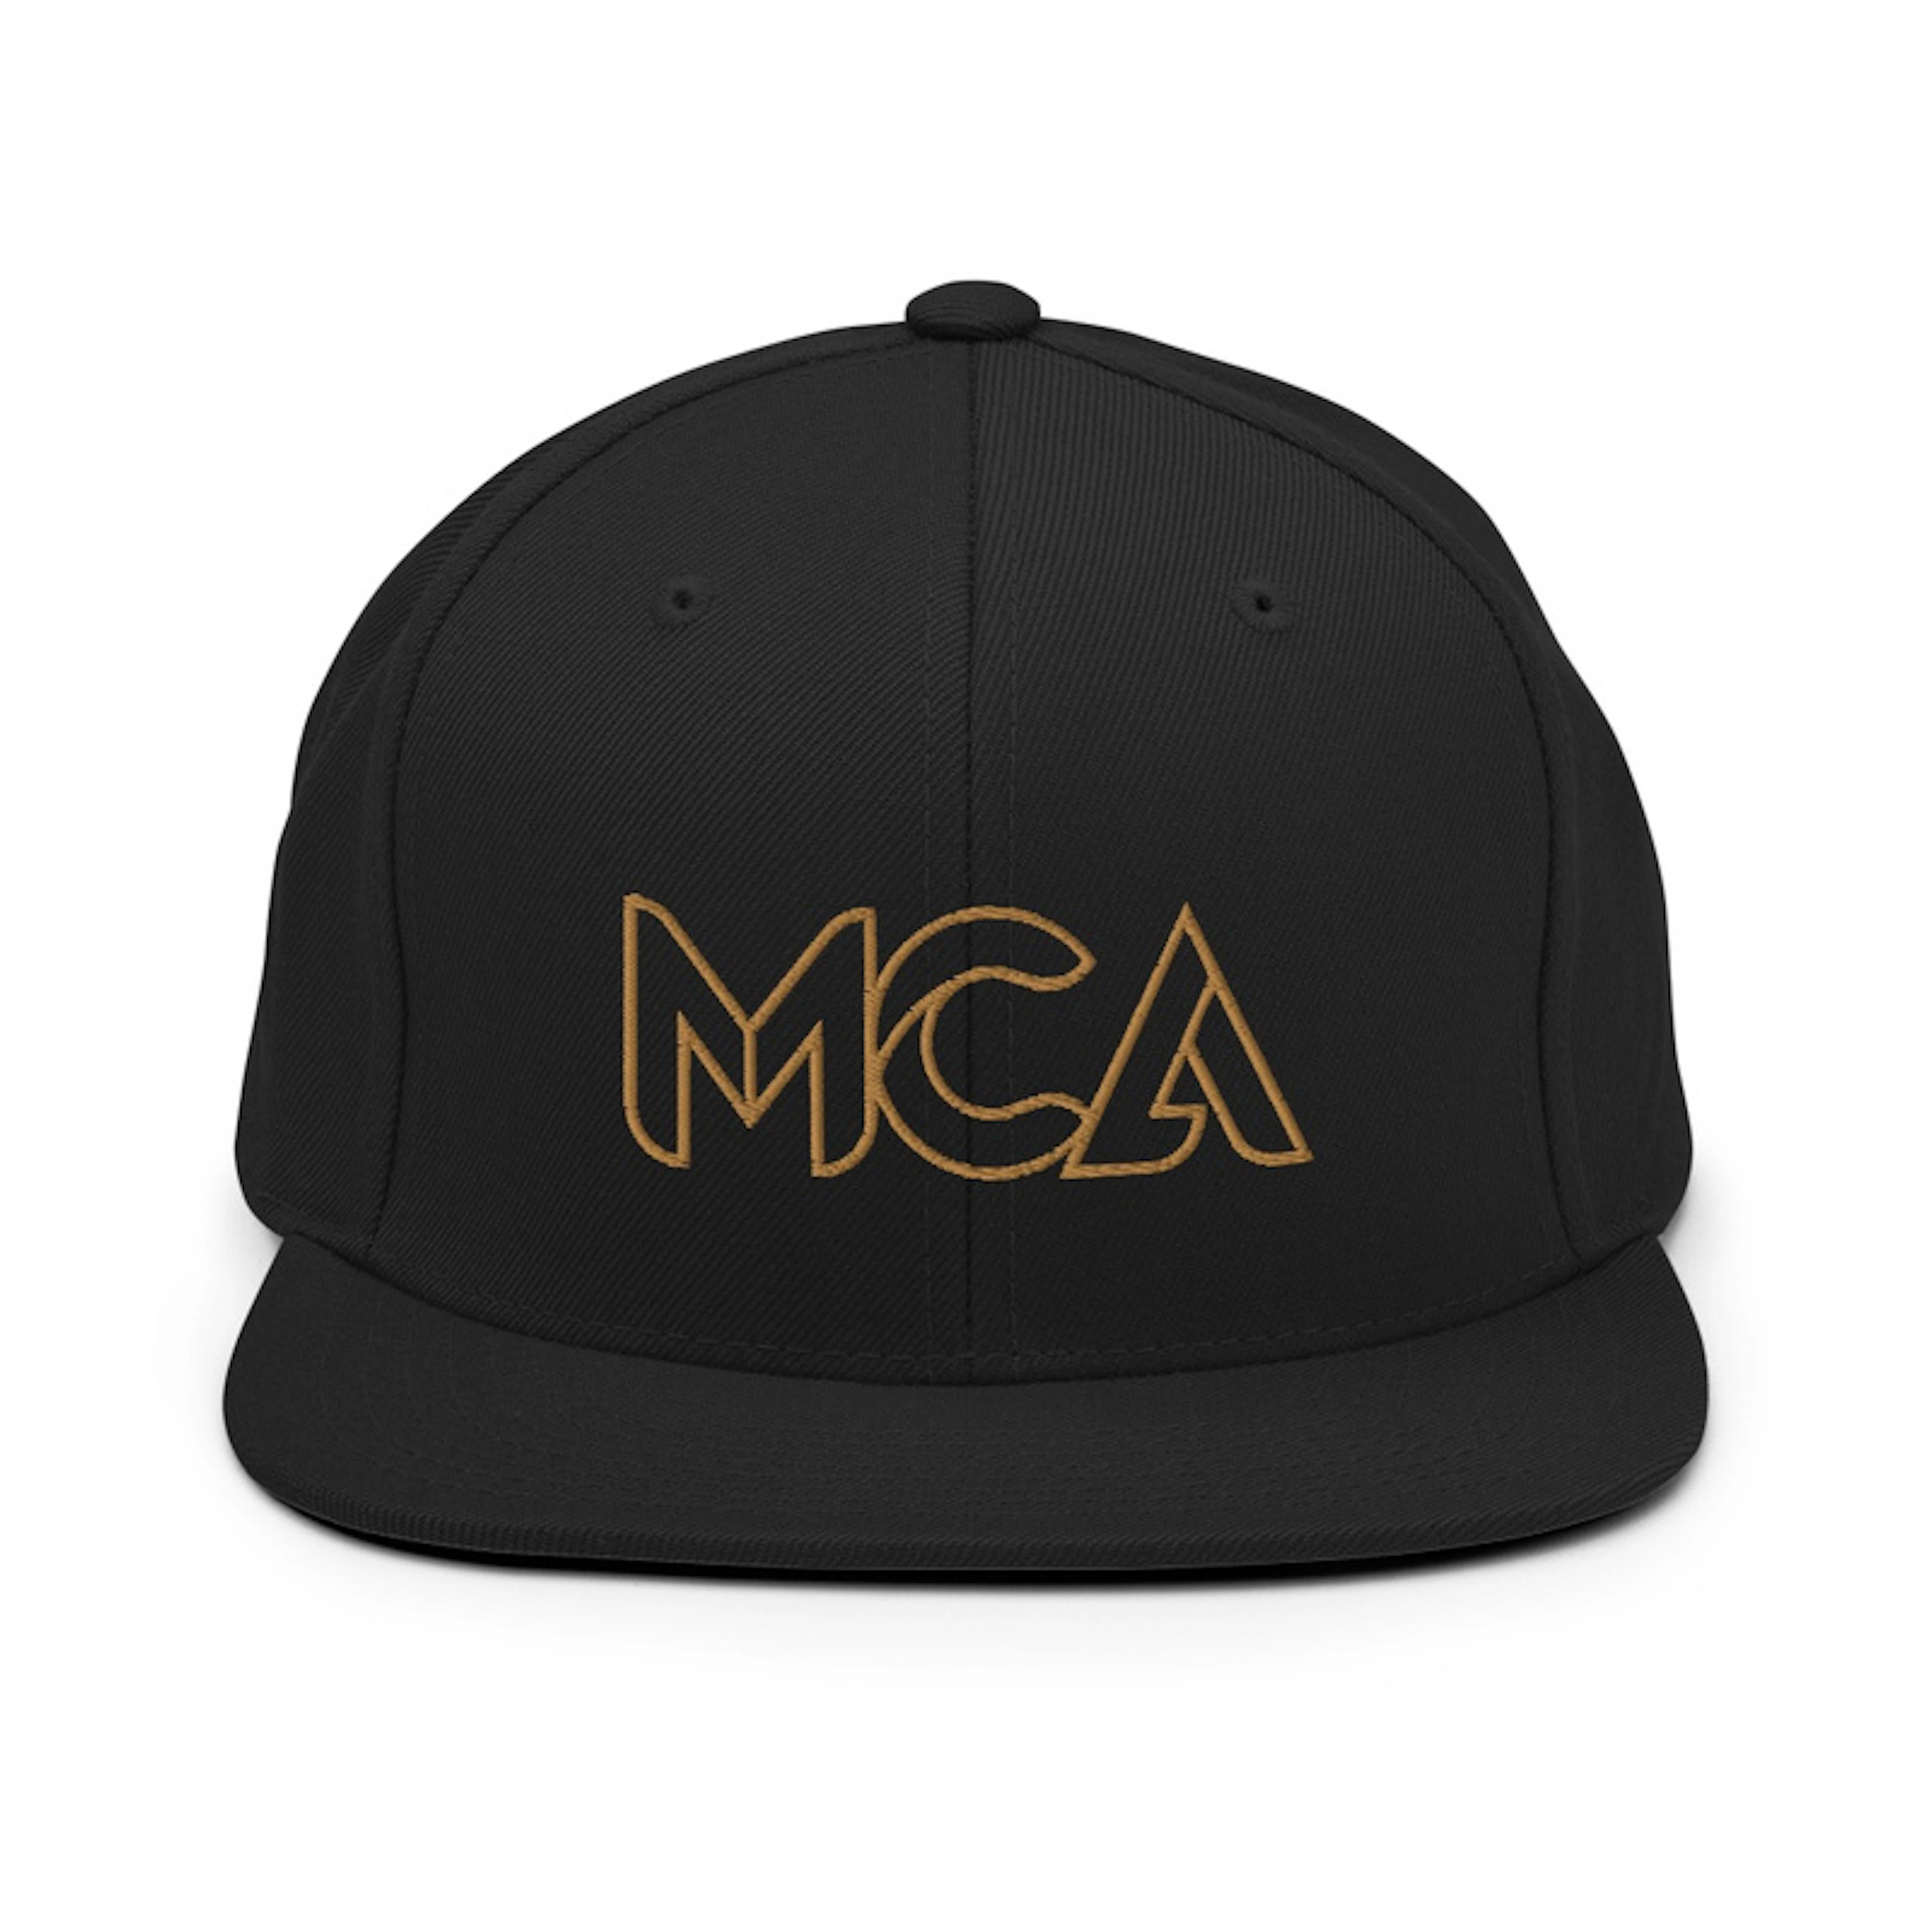 MCA logo embroidered snapback hat